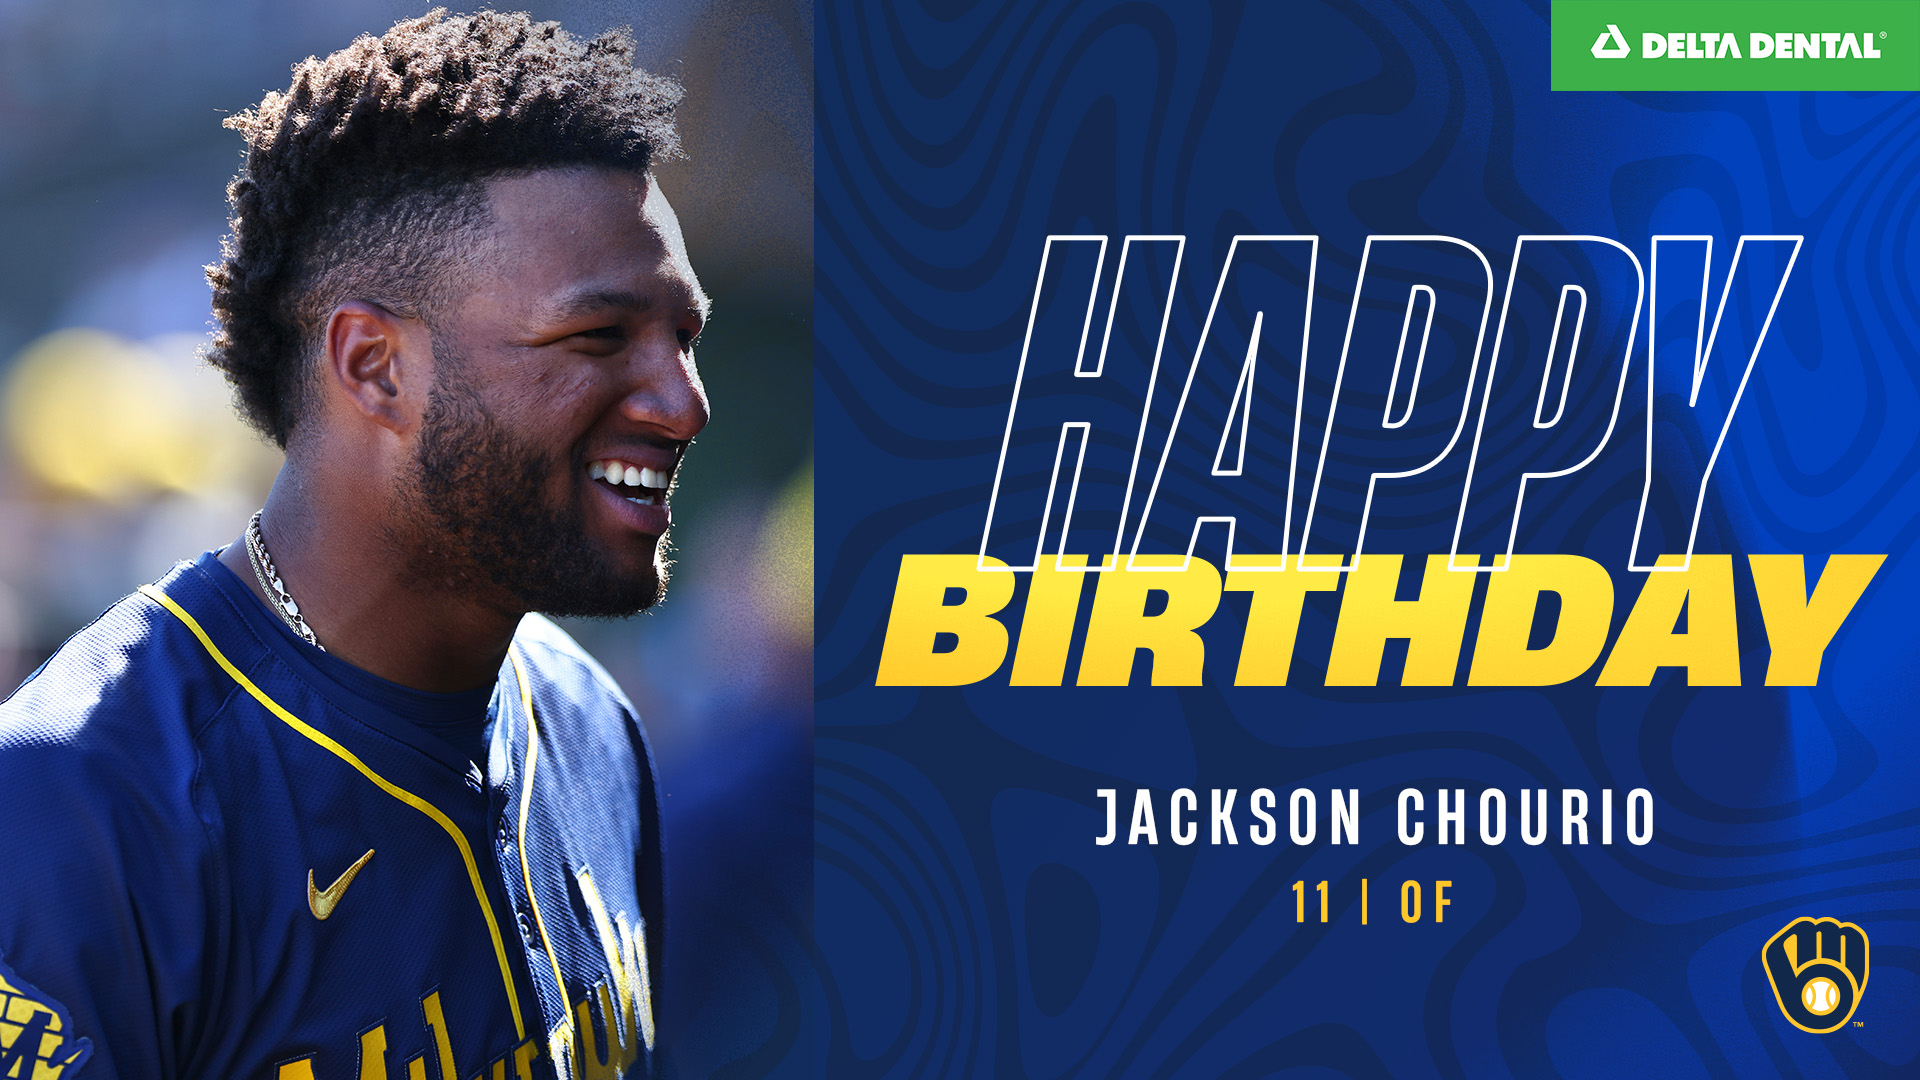 Happy birthday graphic for Jackson Chourio